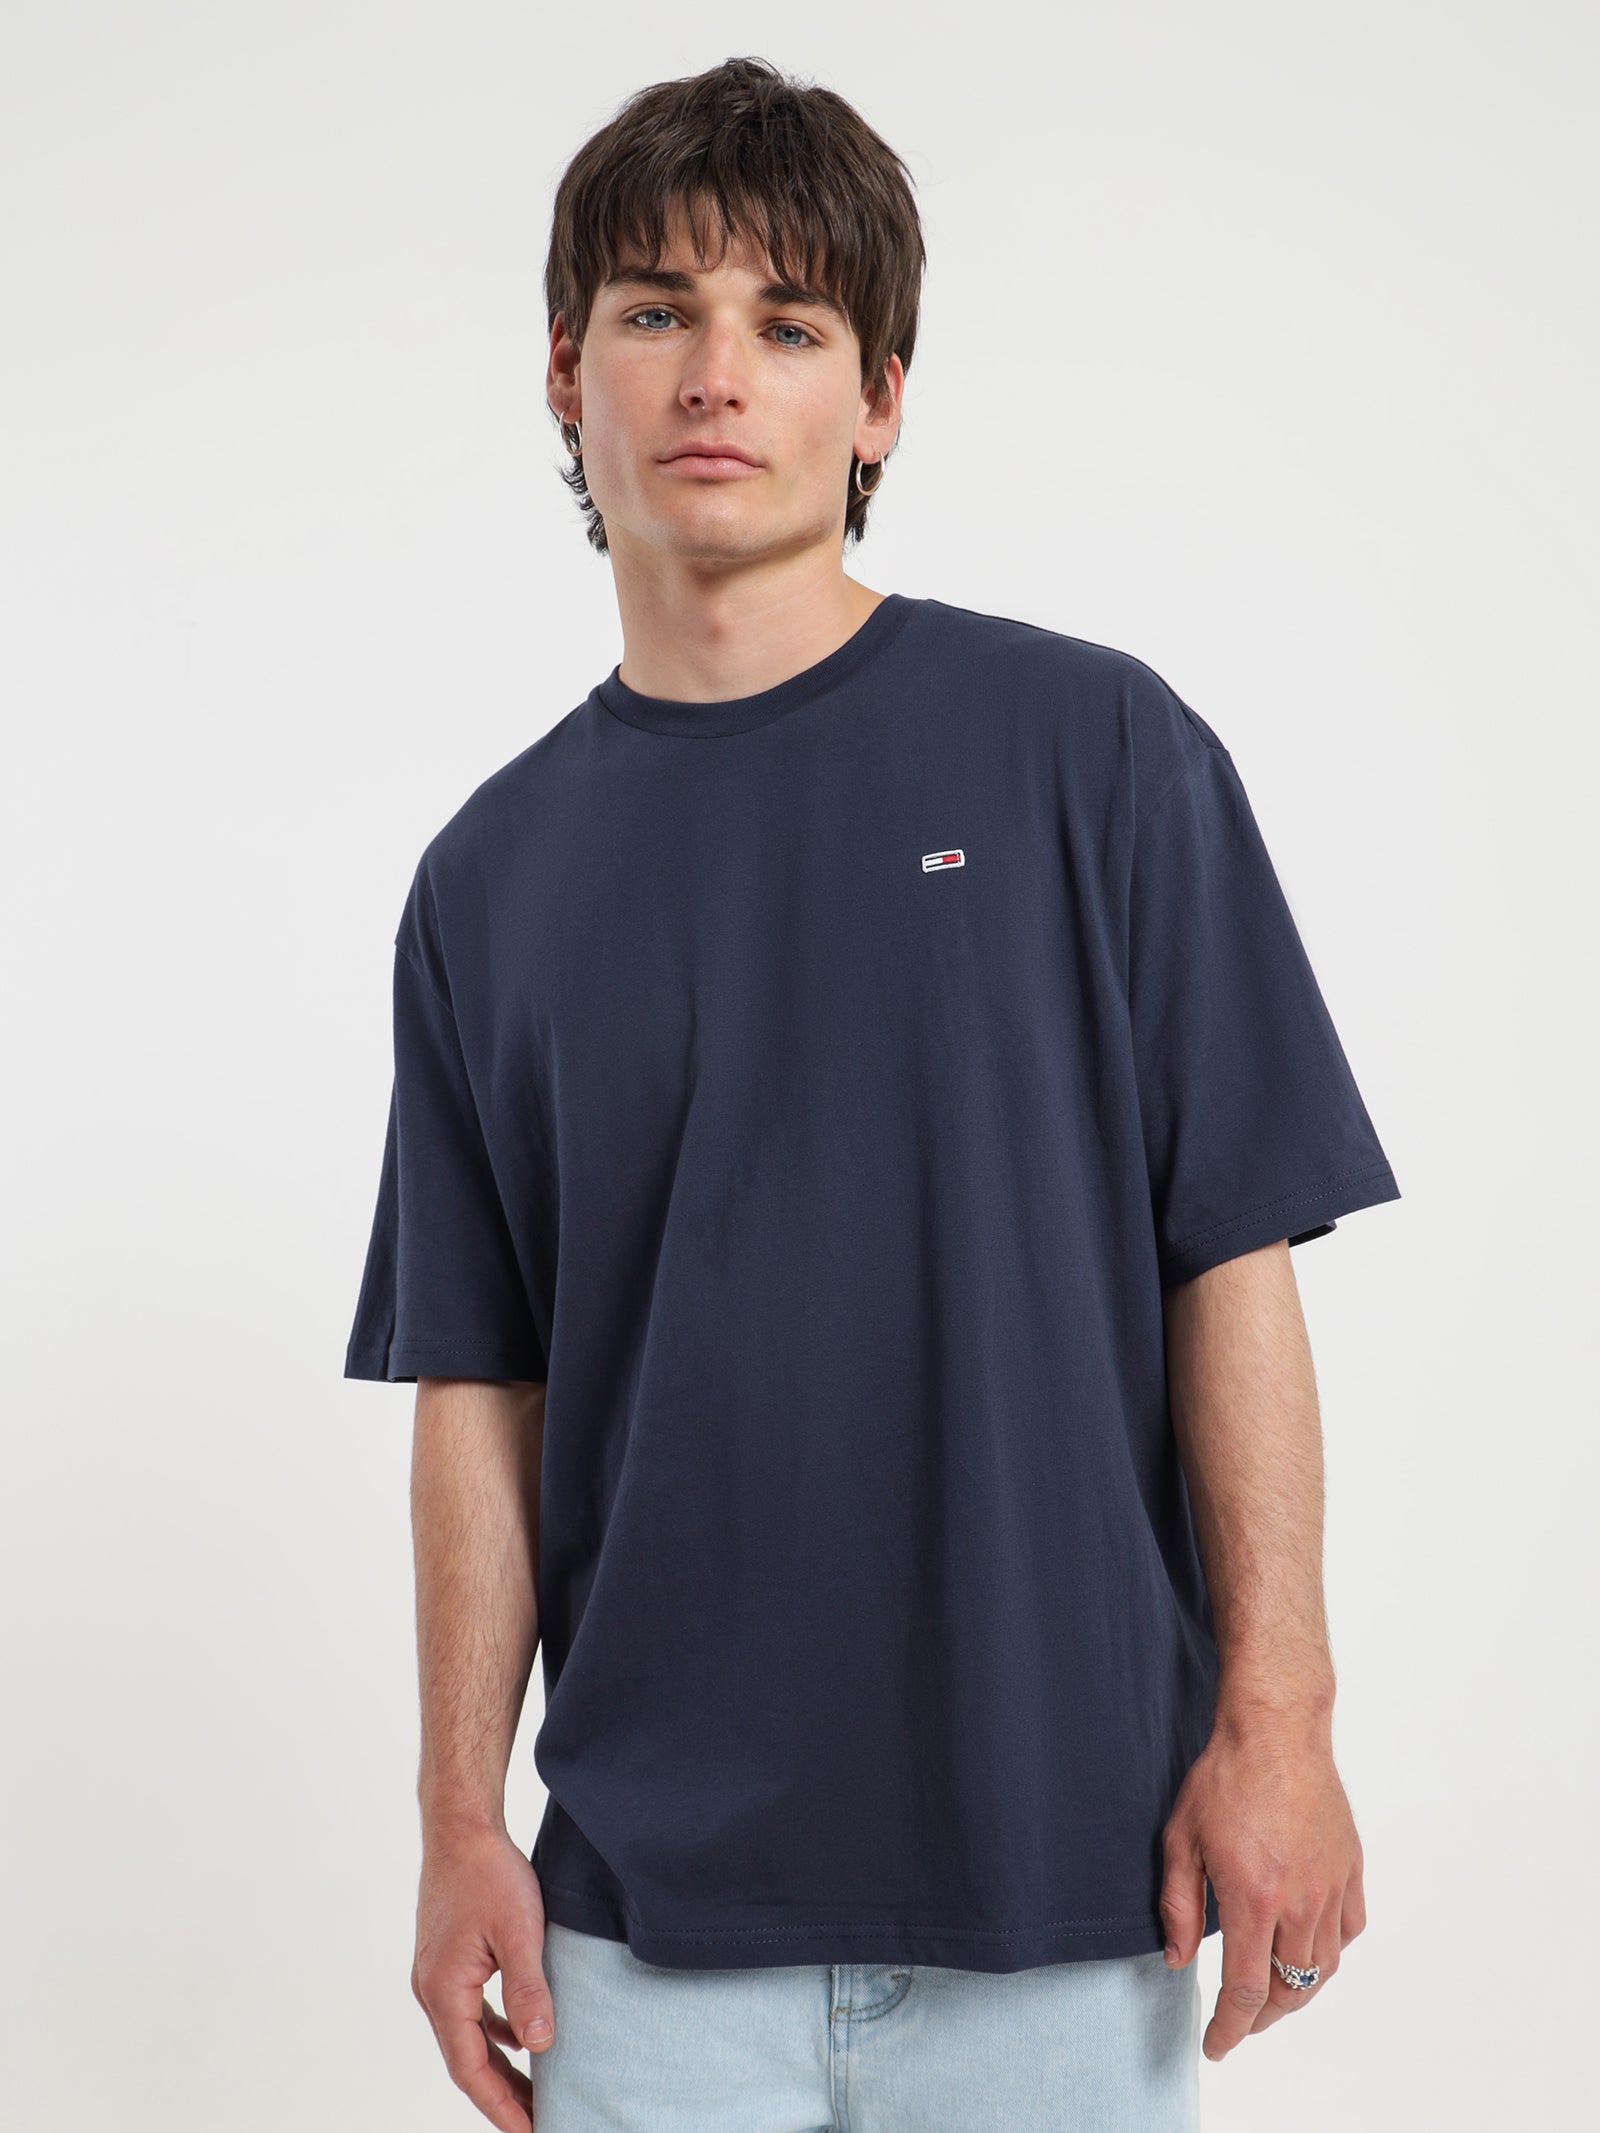 Essential Crew Neck Skate T-Shirt in Navy Blue - Glue Store